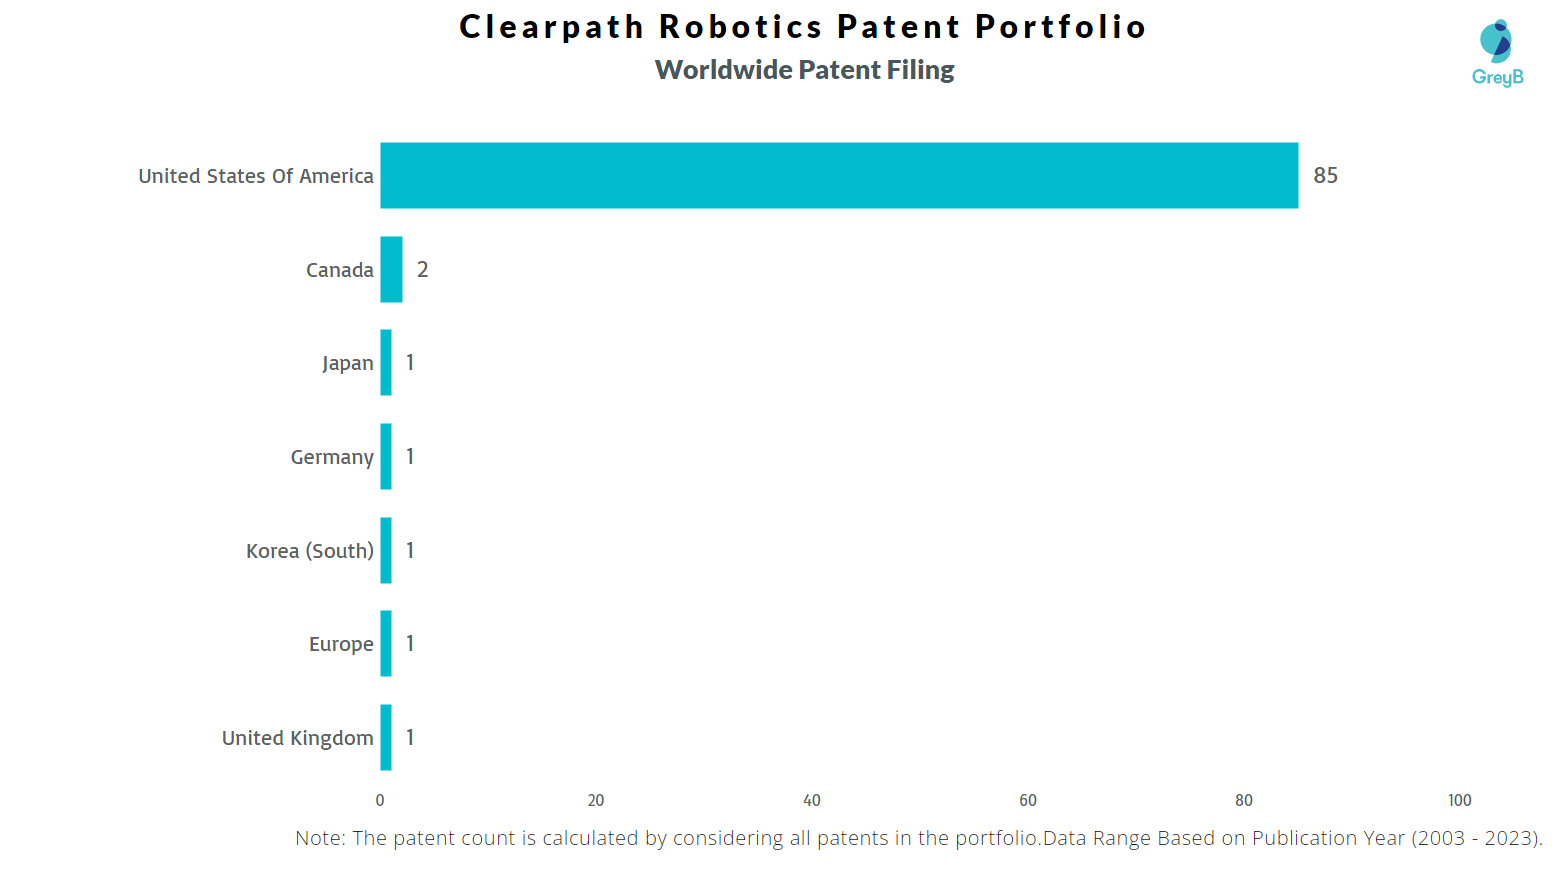 Clearpath Robotics Worldwide Patent Filing